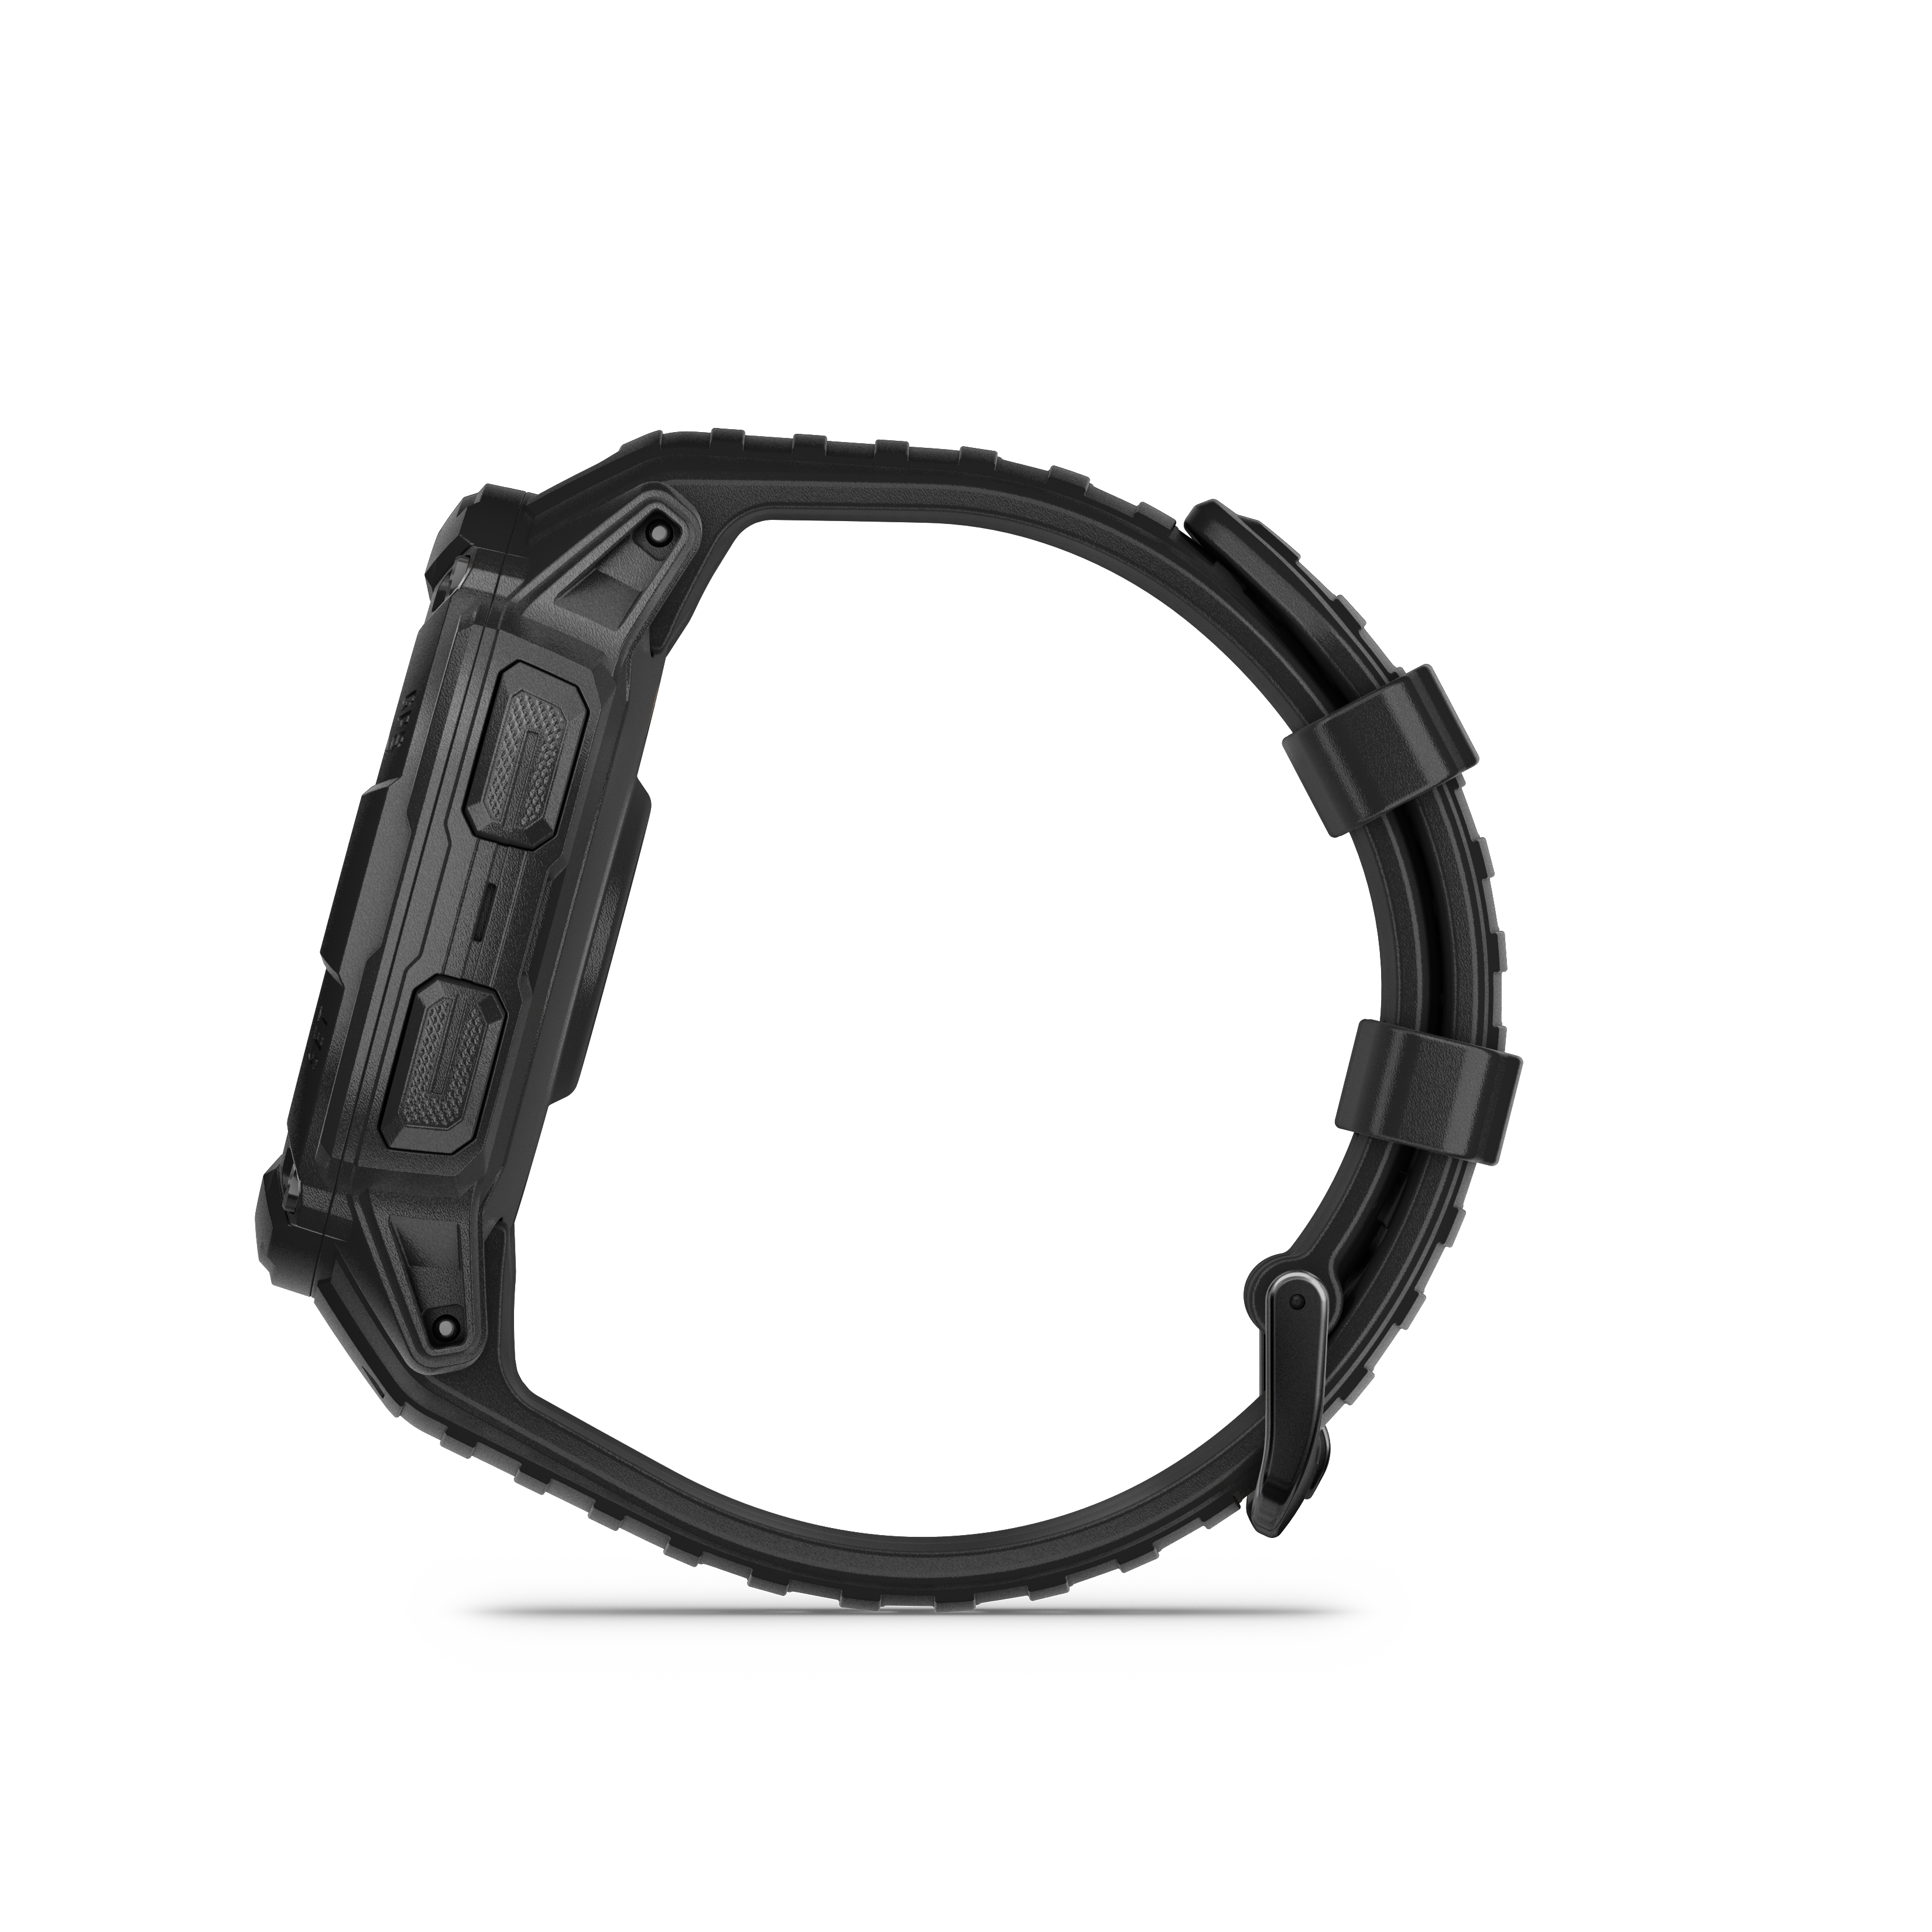 Instinct mm, Edition Smartwatch Solar 26 GARMIN Tactical Silikon, Schwarz 2X